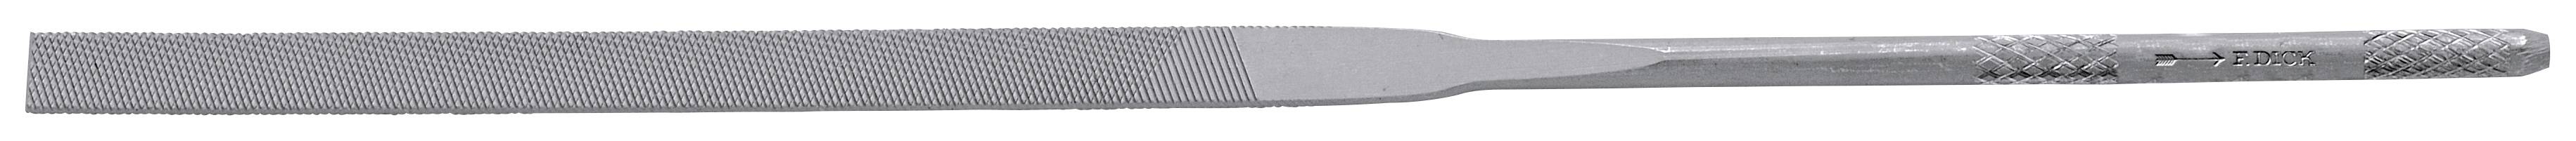 DICK 21121620 Nadelfeile flach 160/2 Länge 160 mm 1 Stück (21121620)